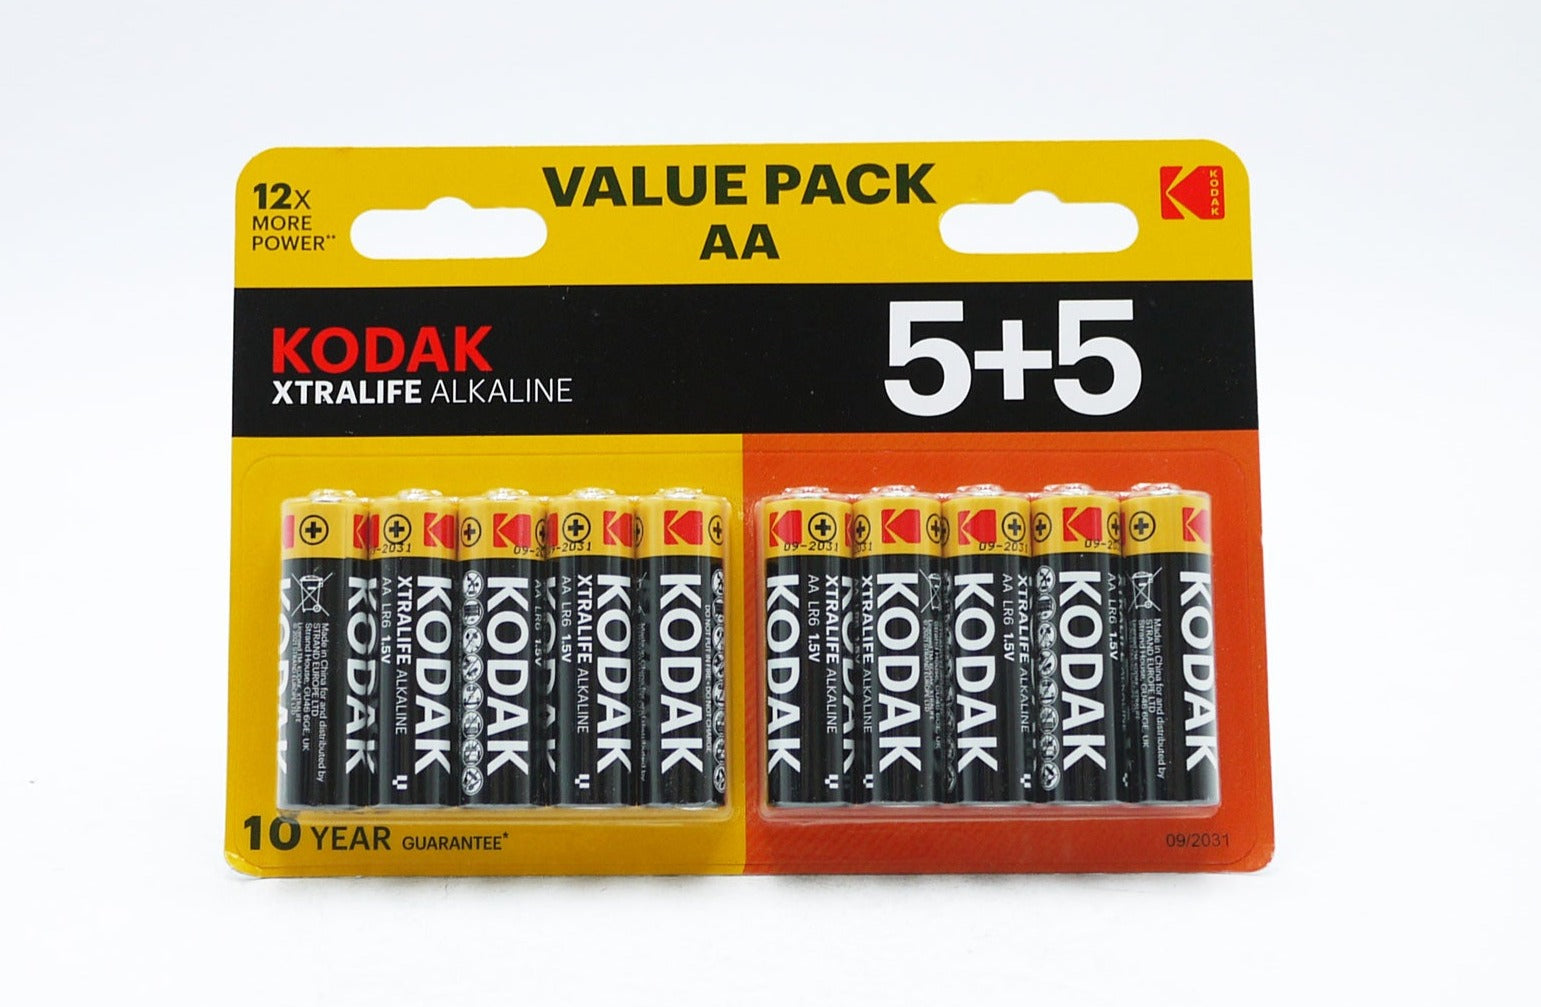 Kodak Xtralife Alkaline AA Batteries 10pk